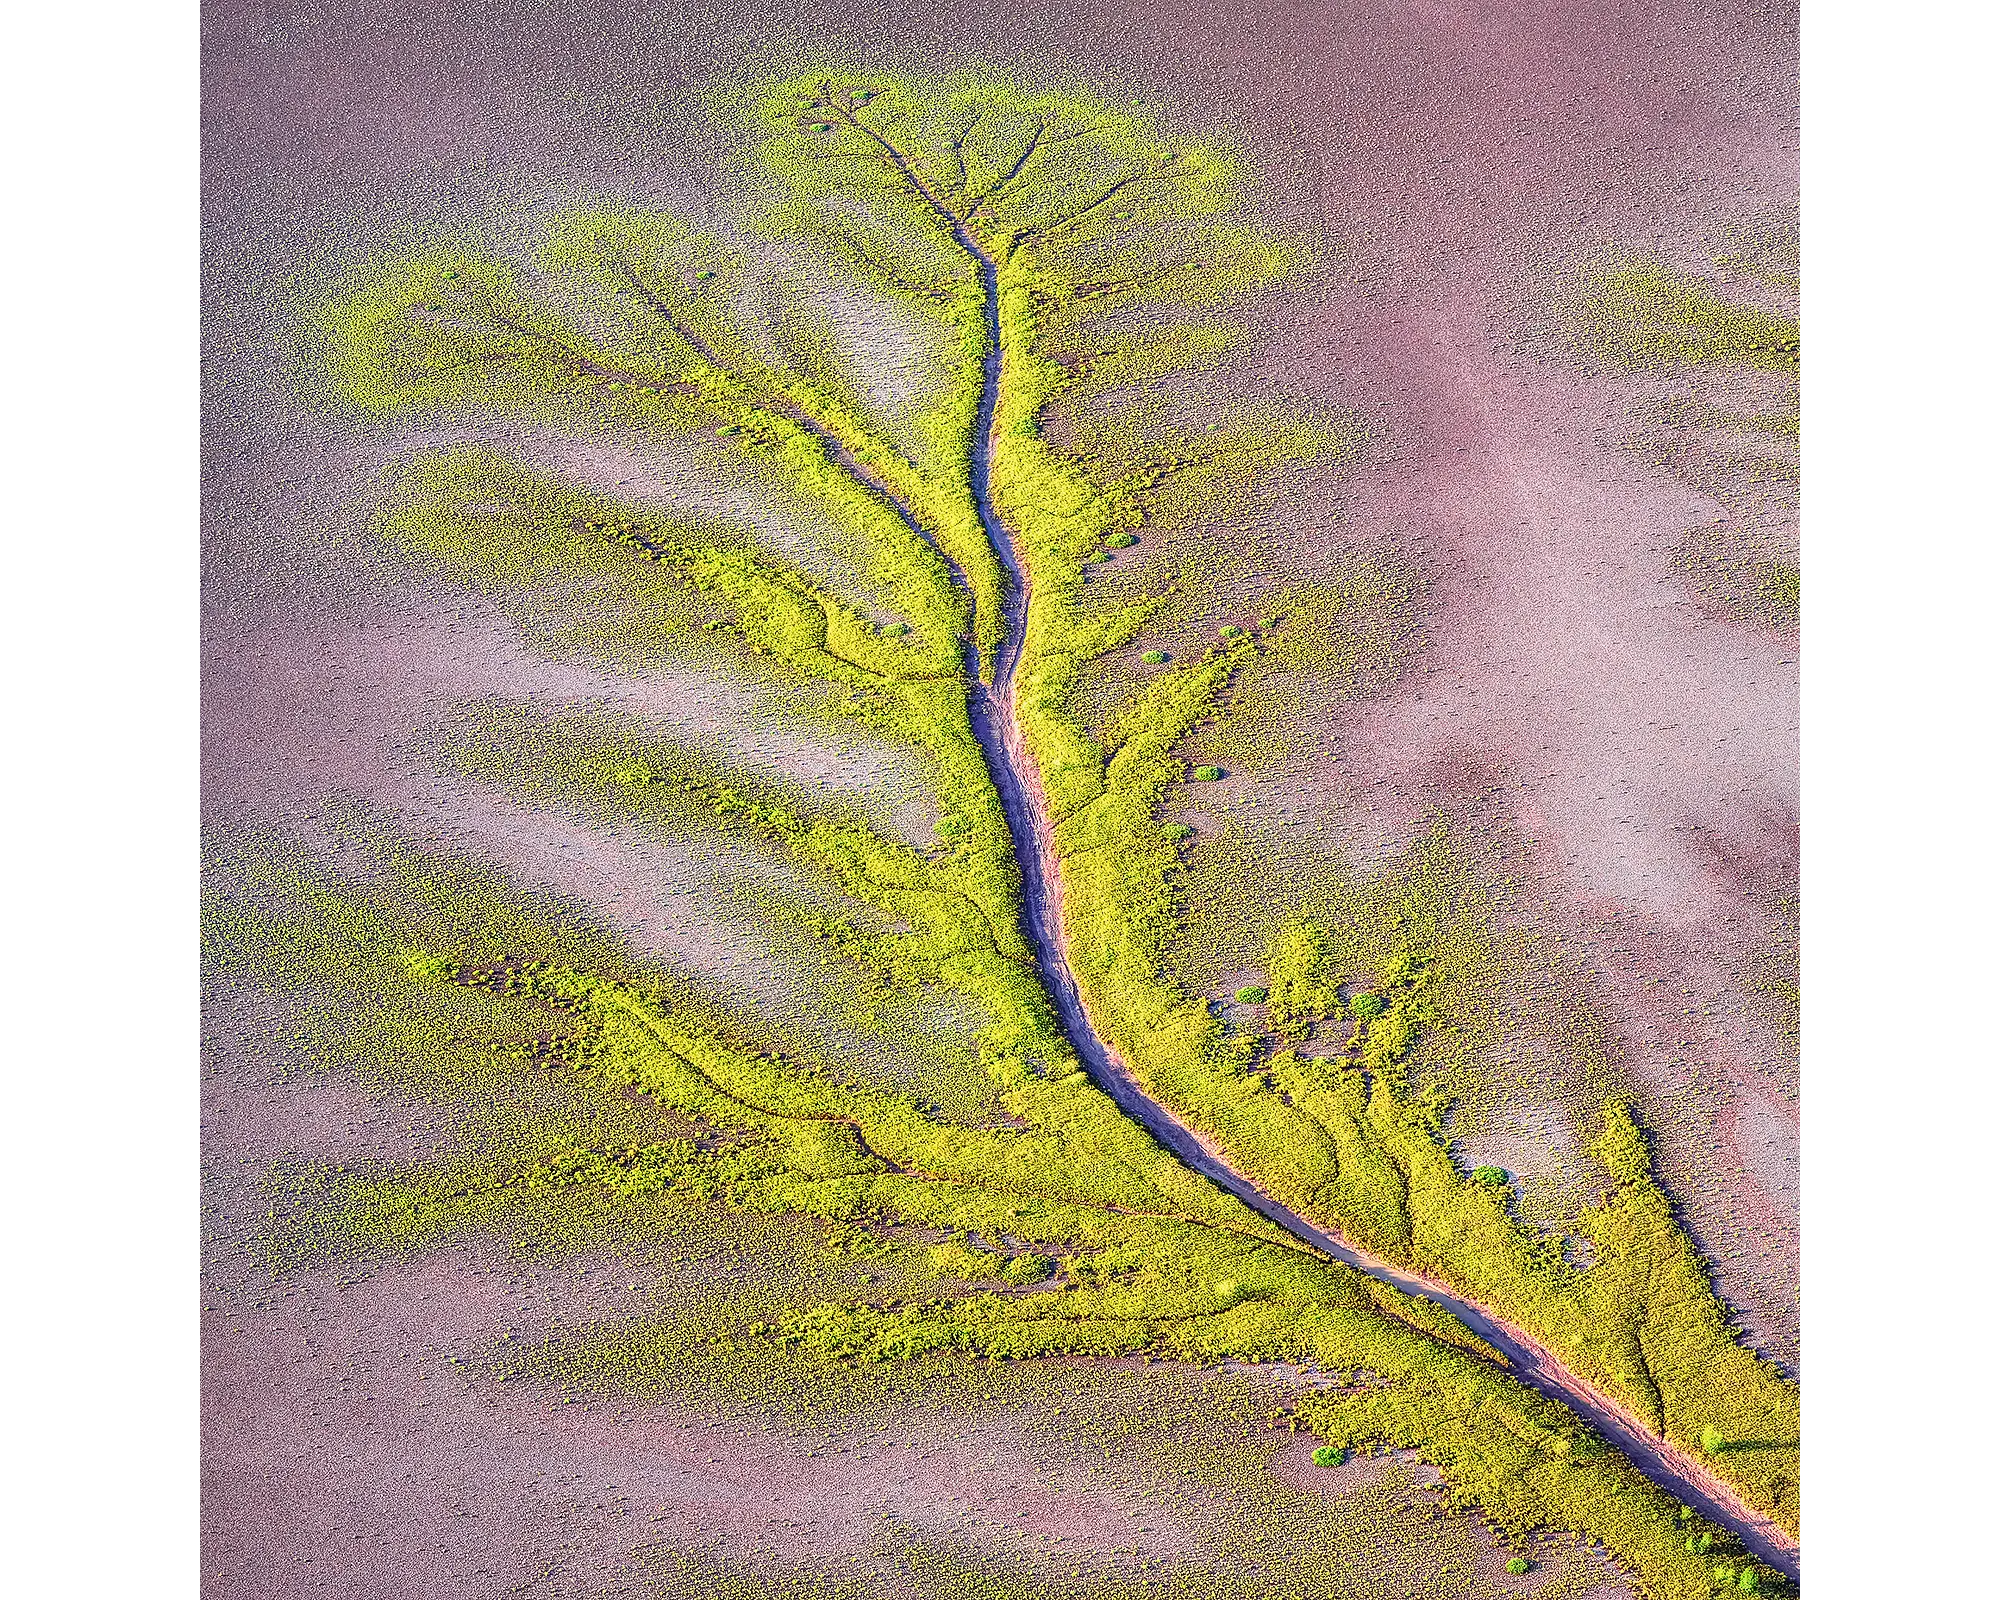 Mangrove trees along the King River, The Kimberley, Western Australia.